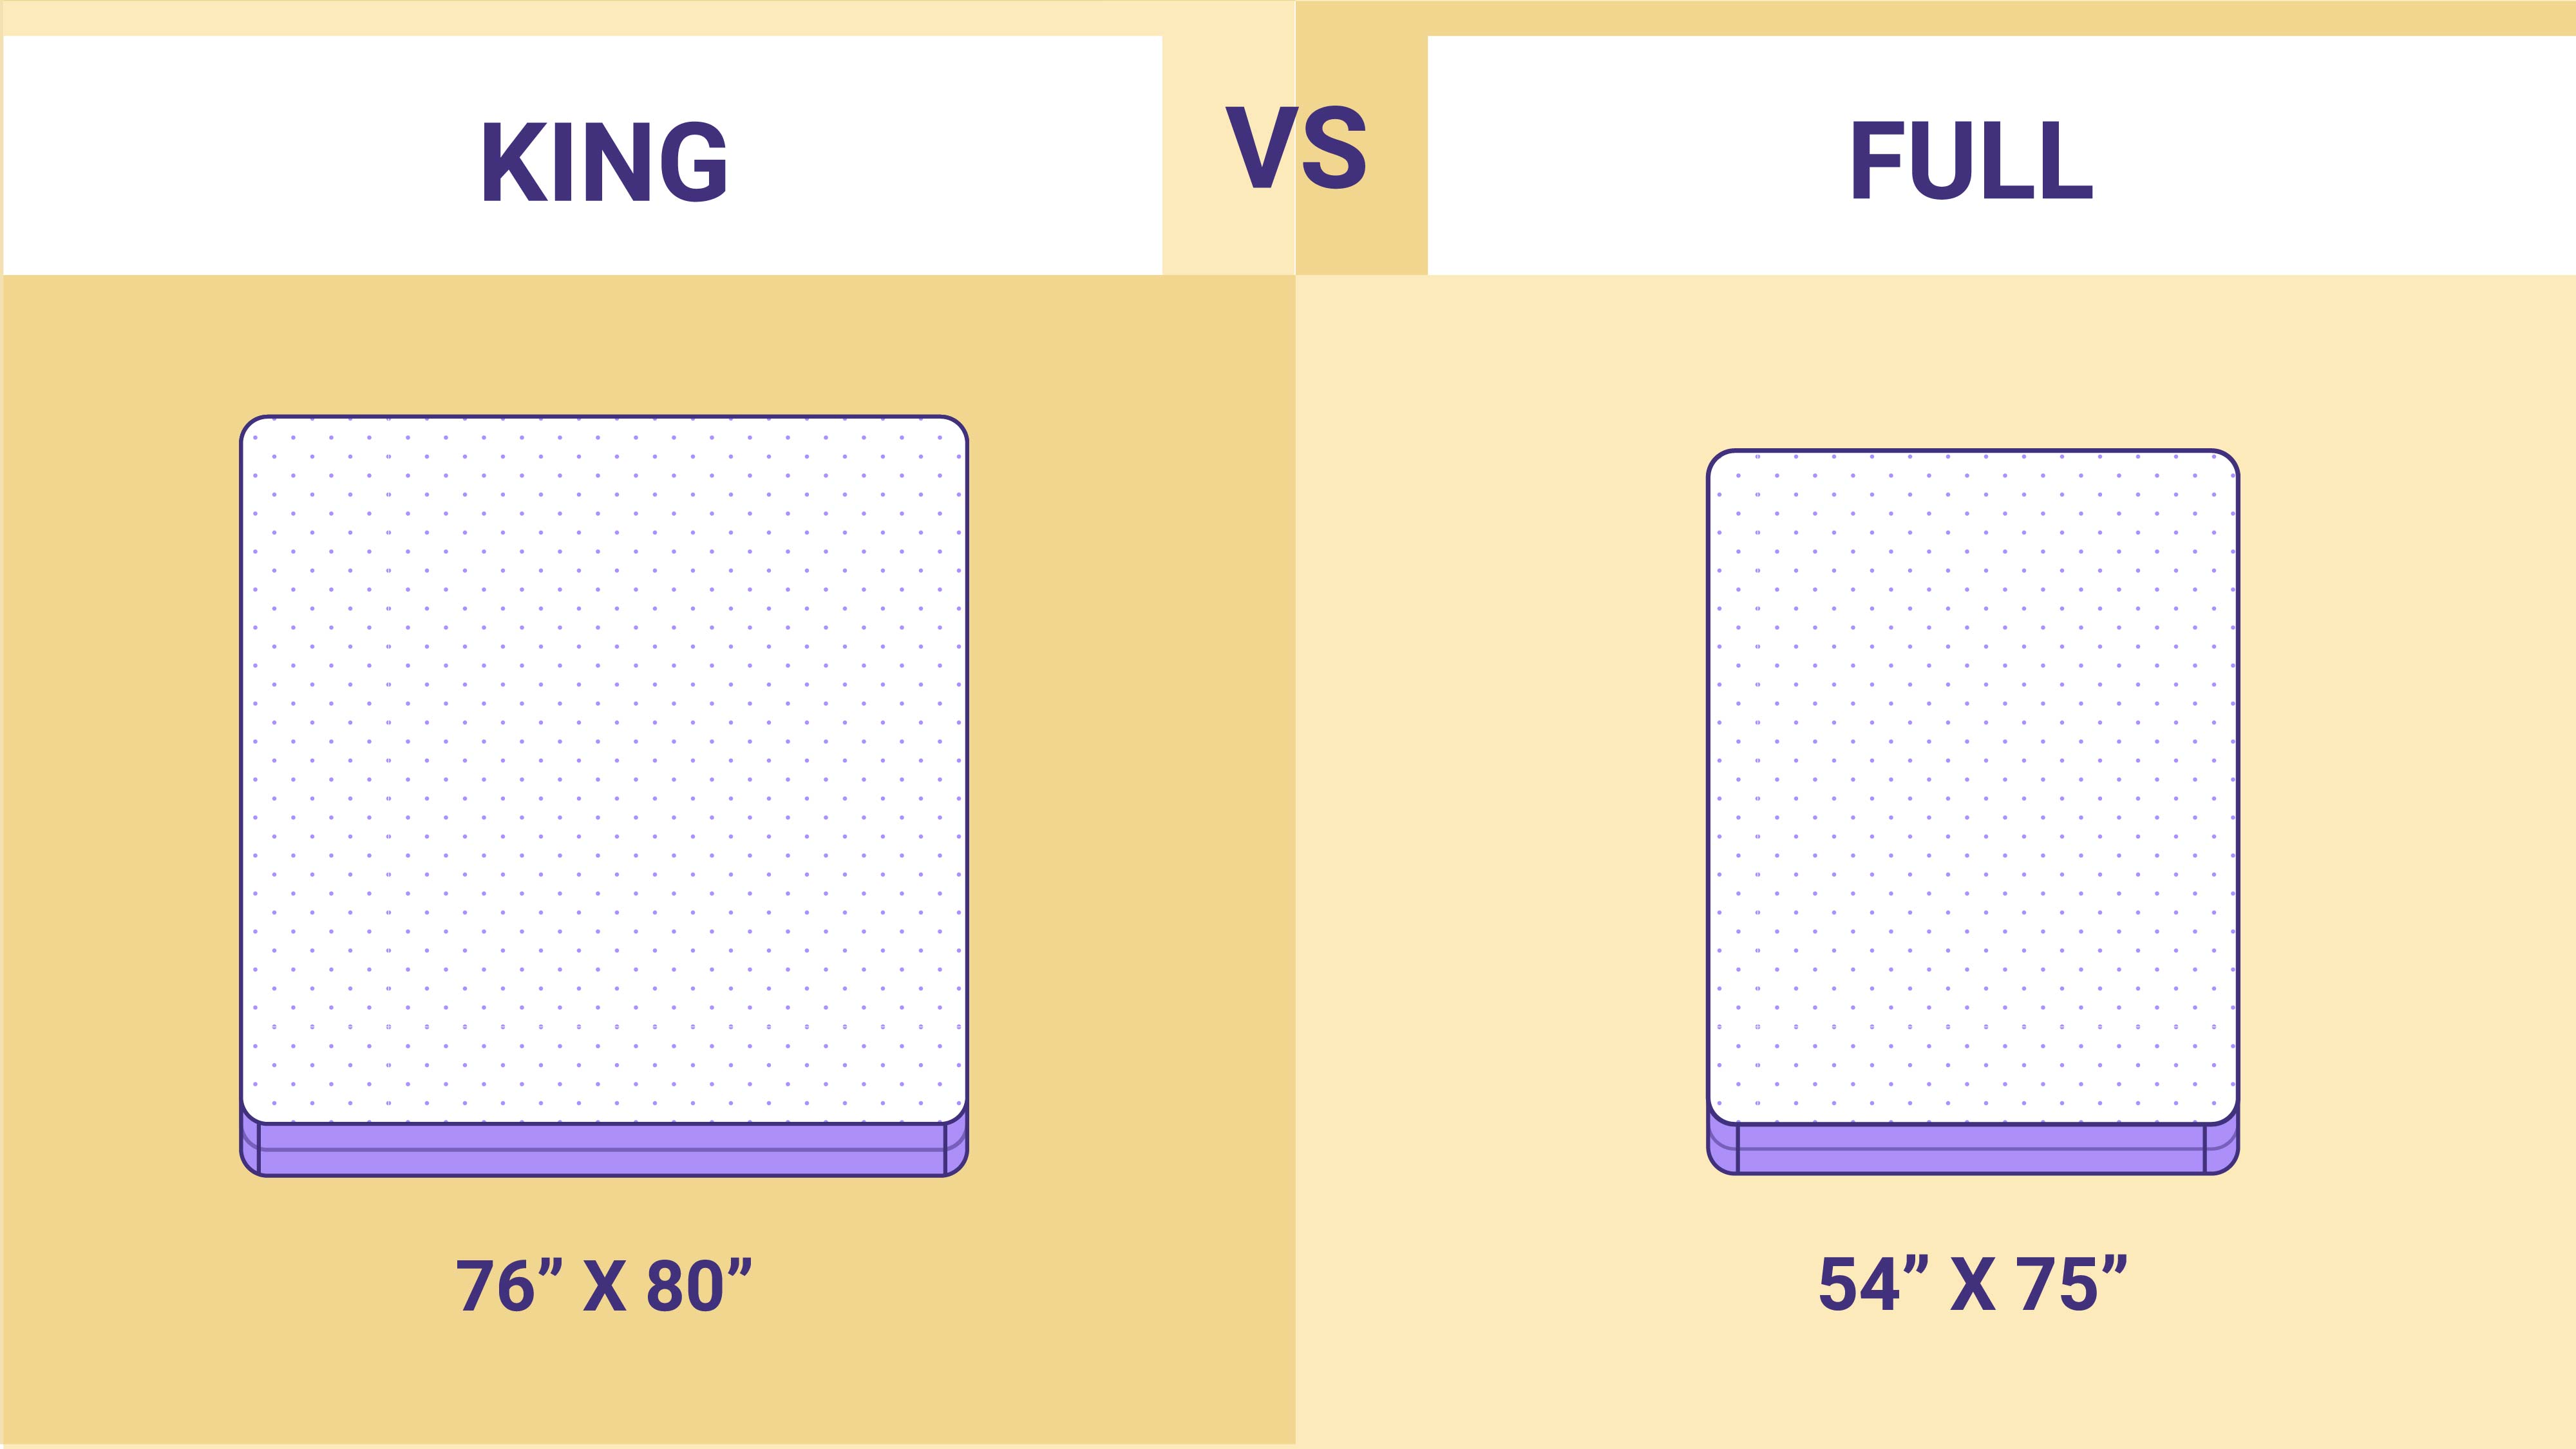 king size mattress vs full size mattress